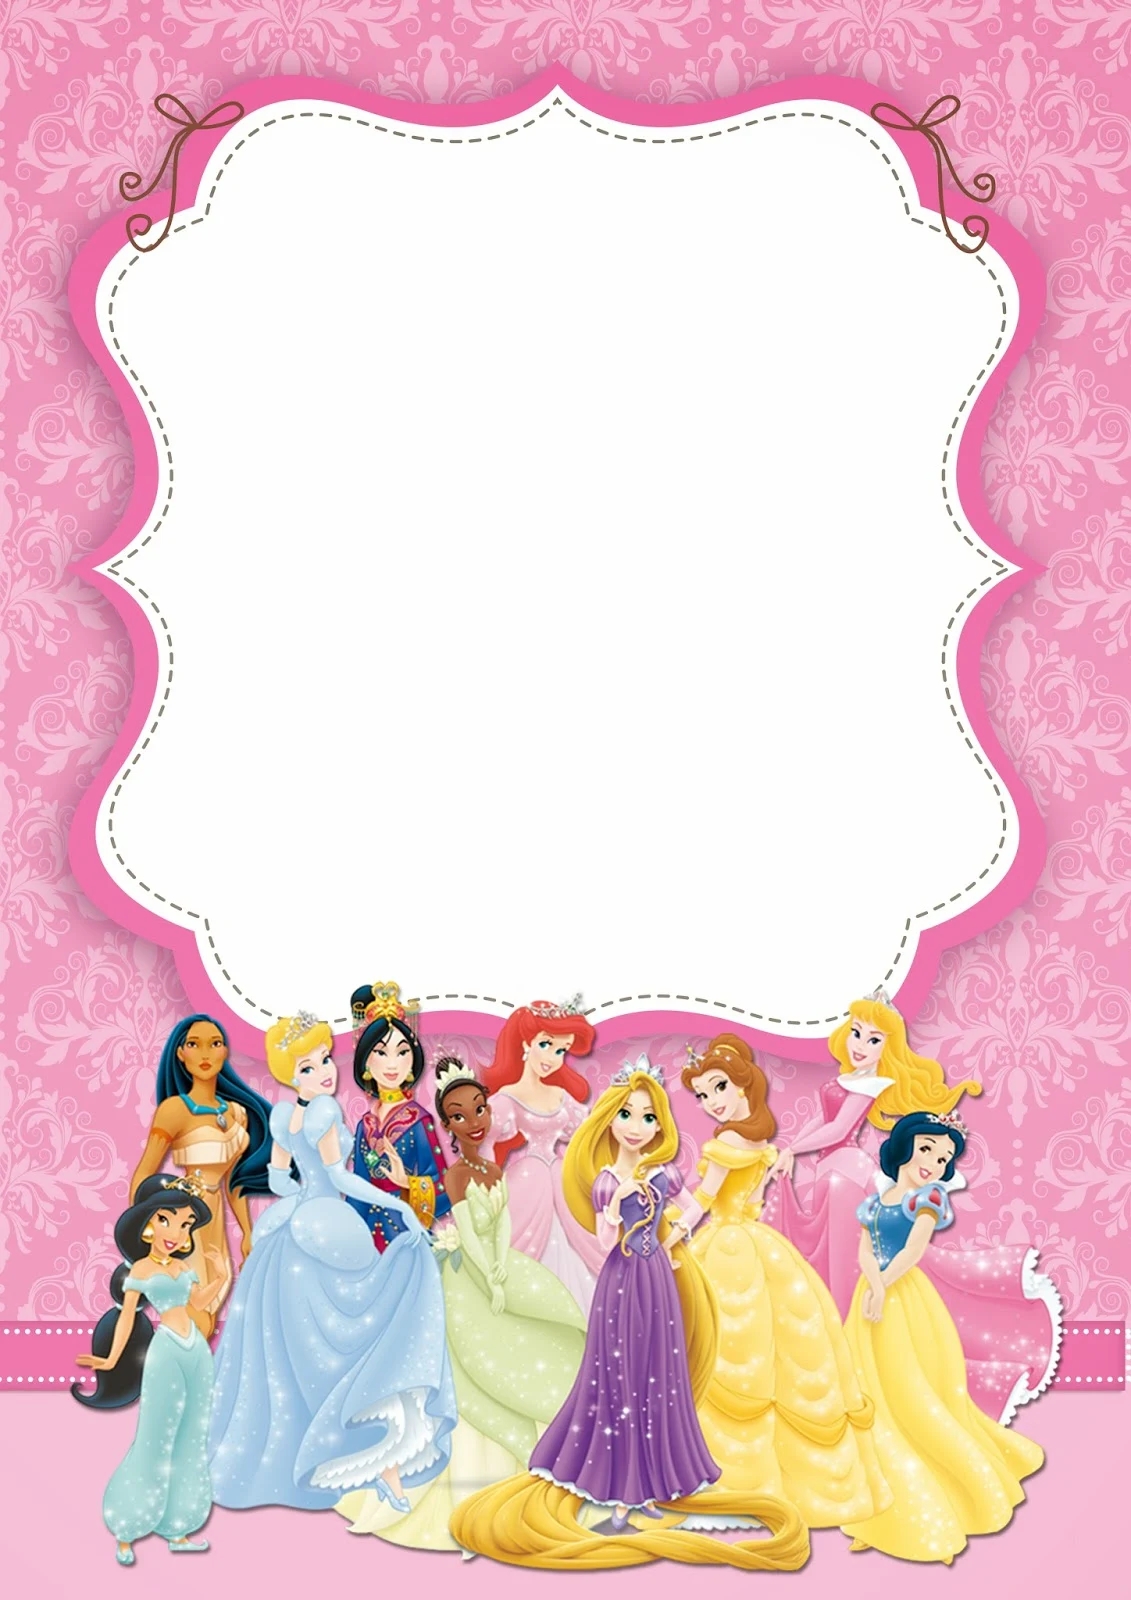 Disney Princess Party Free Printable Party Invitations Oh My Fiesta In English - Disney Princess Free Printable Invitations